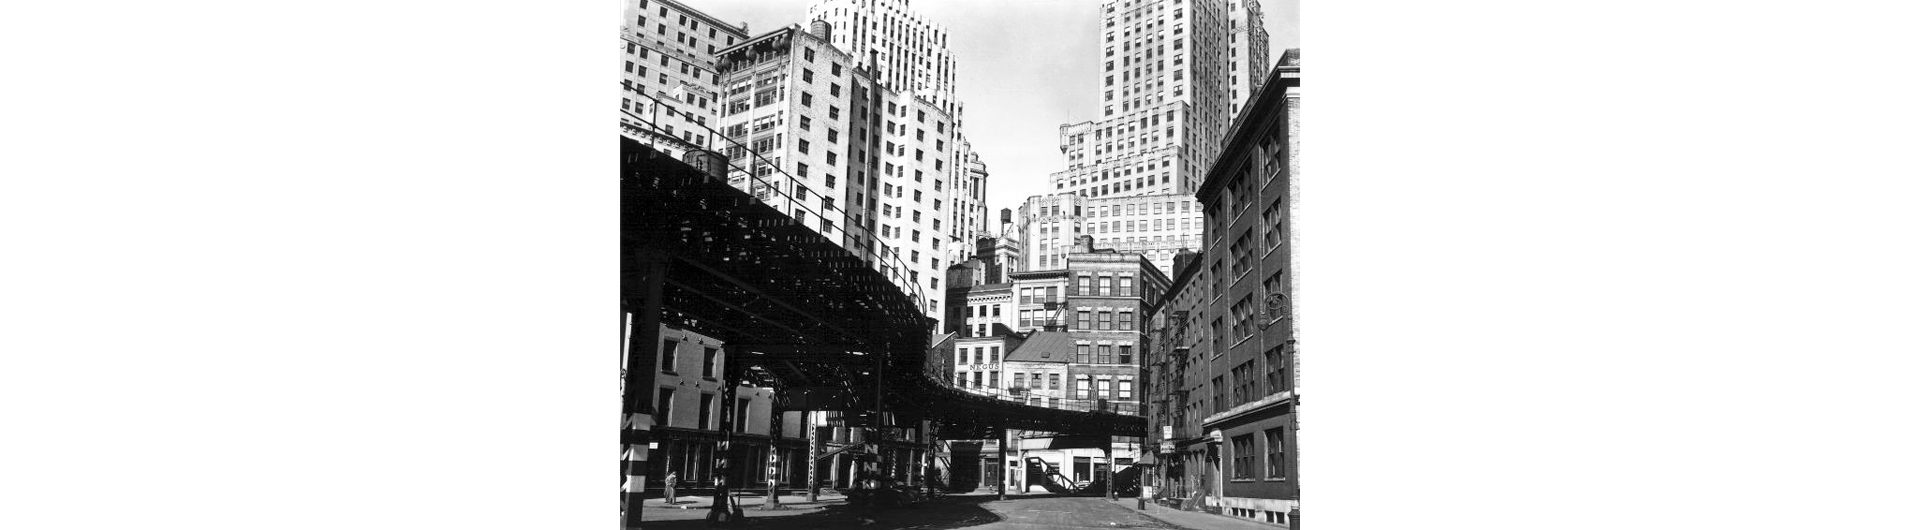 Cityscape black and white photo by Brett Weston